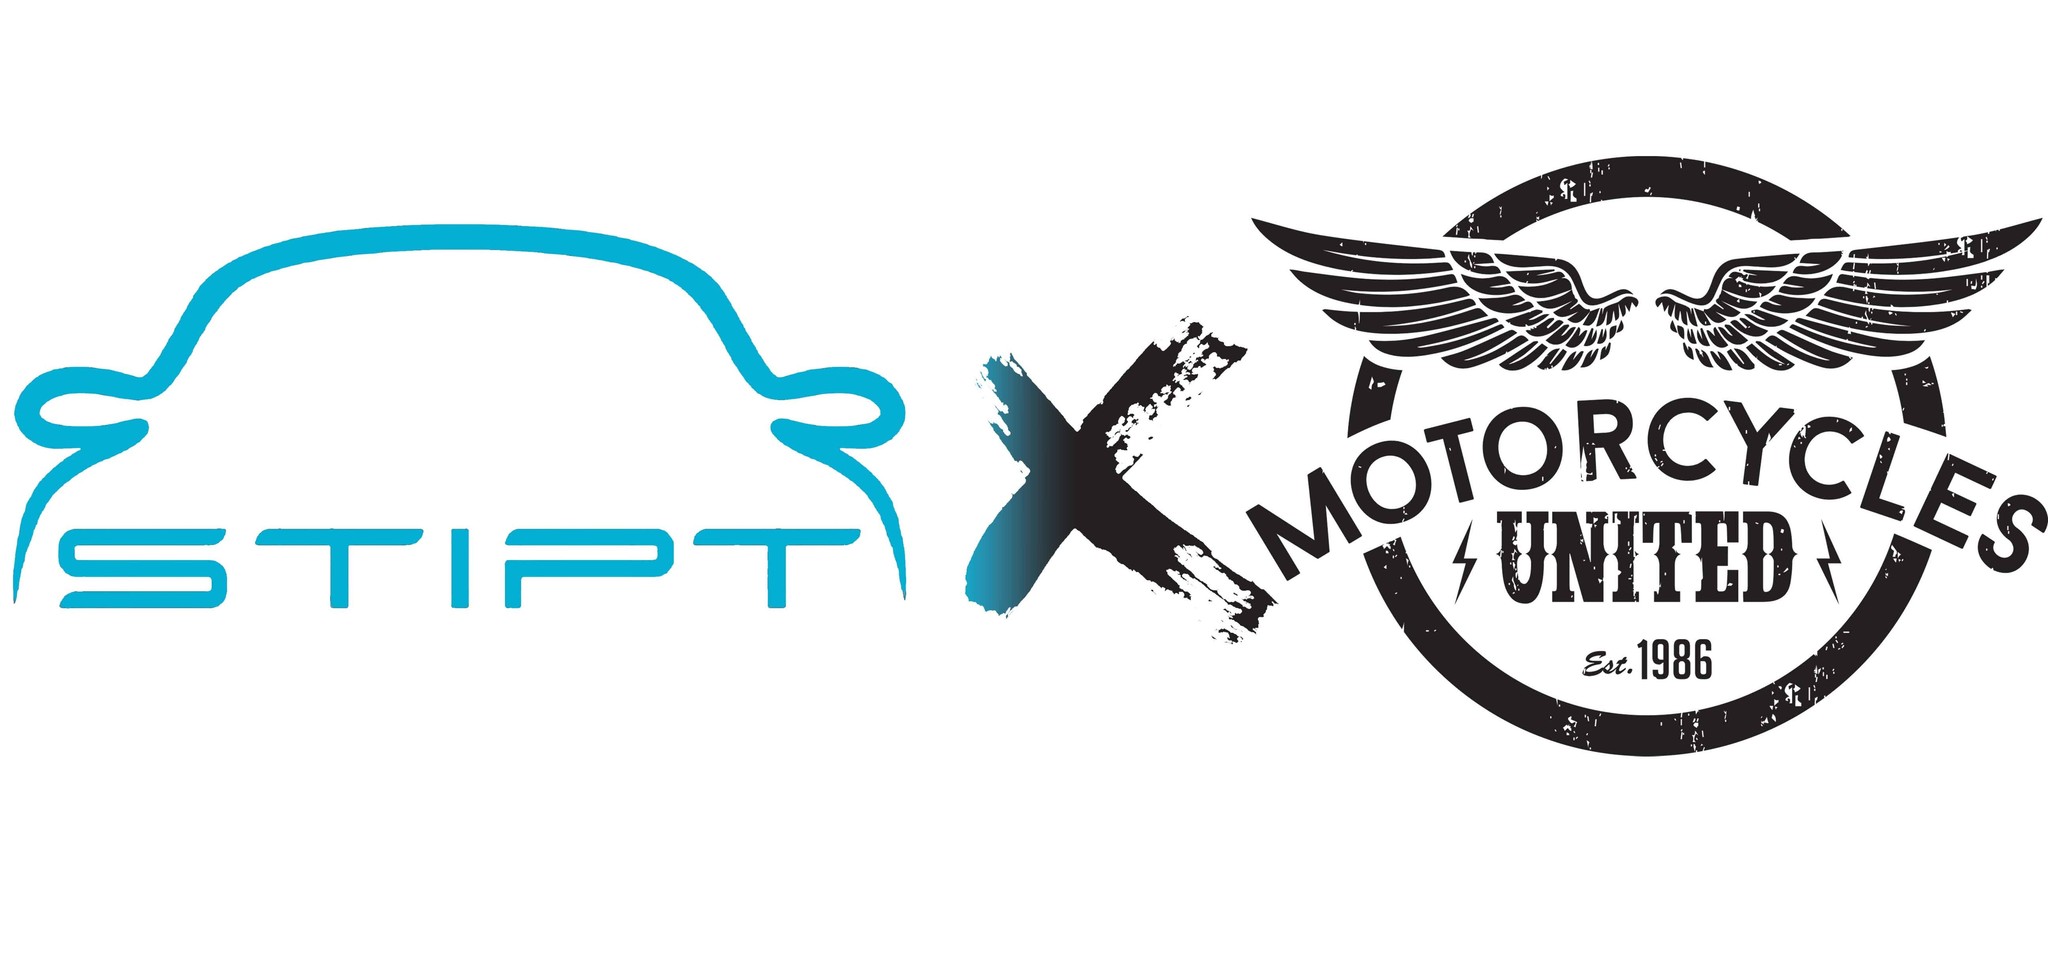 Blog - Stipt Polish Point Shop & Motorcycles United 